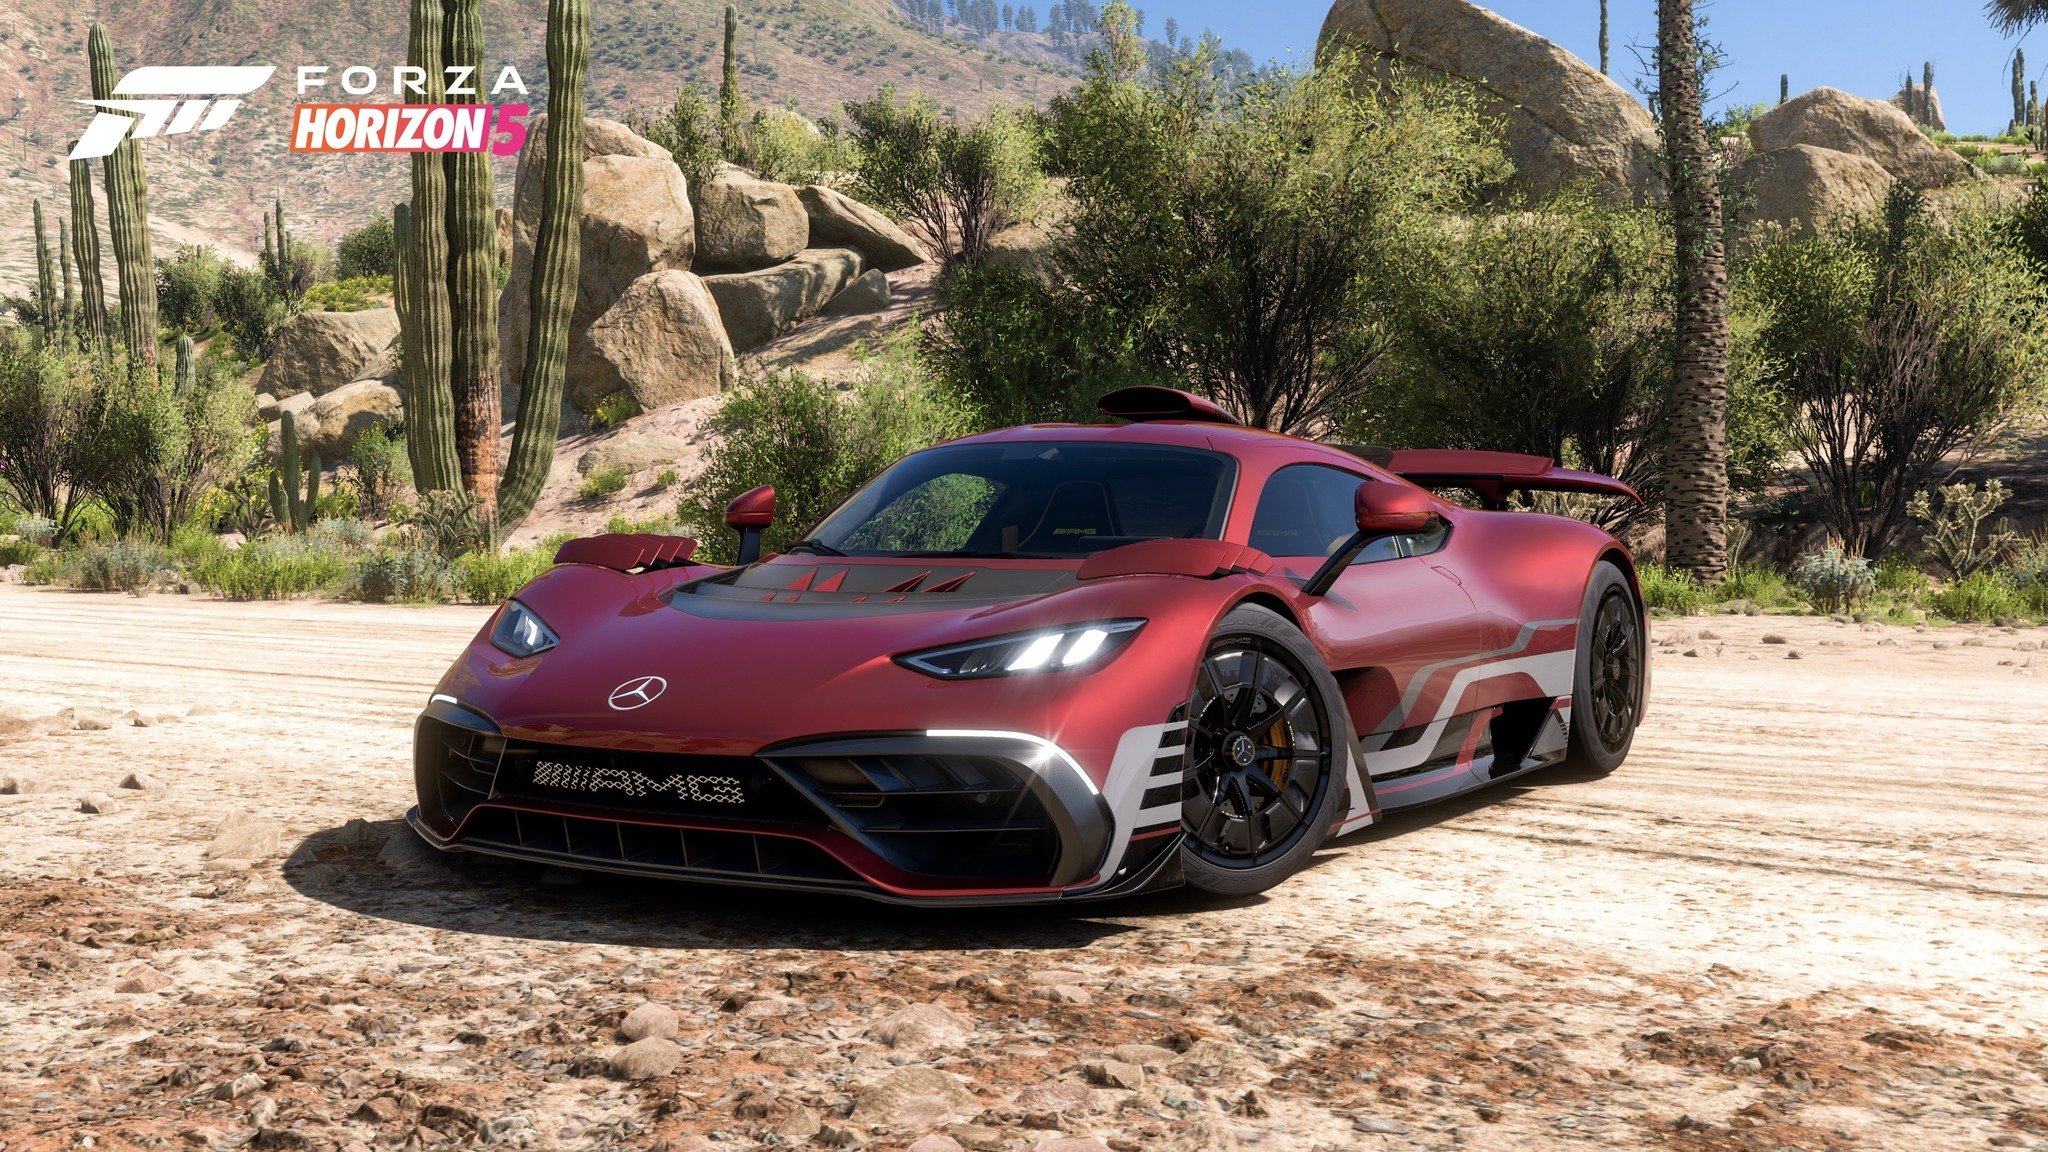 The next Forza Horizon 5 update will include brand-new German vehicles